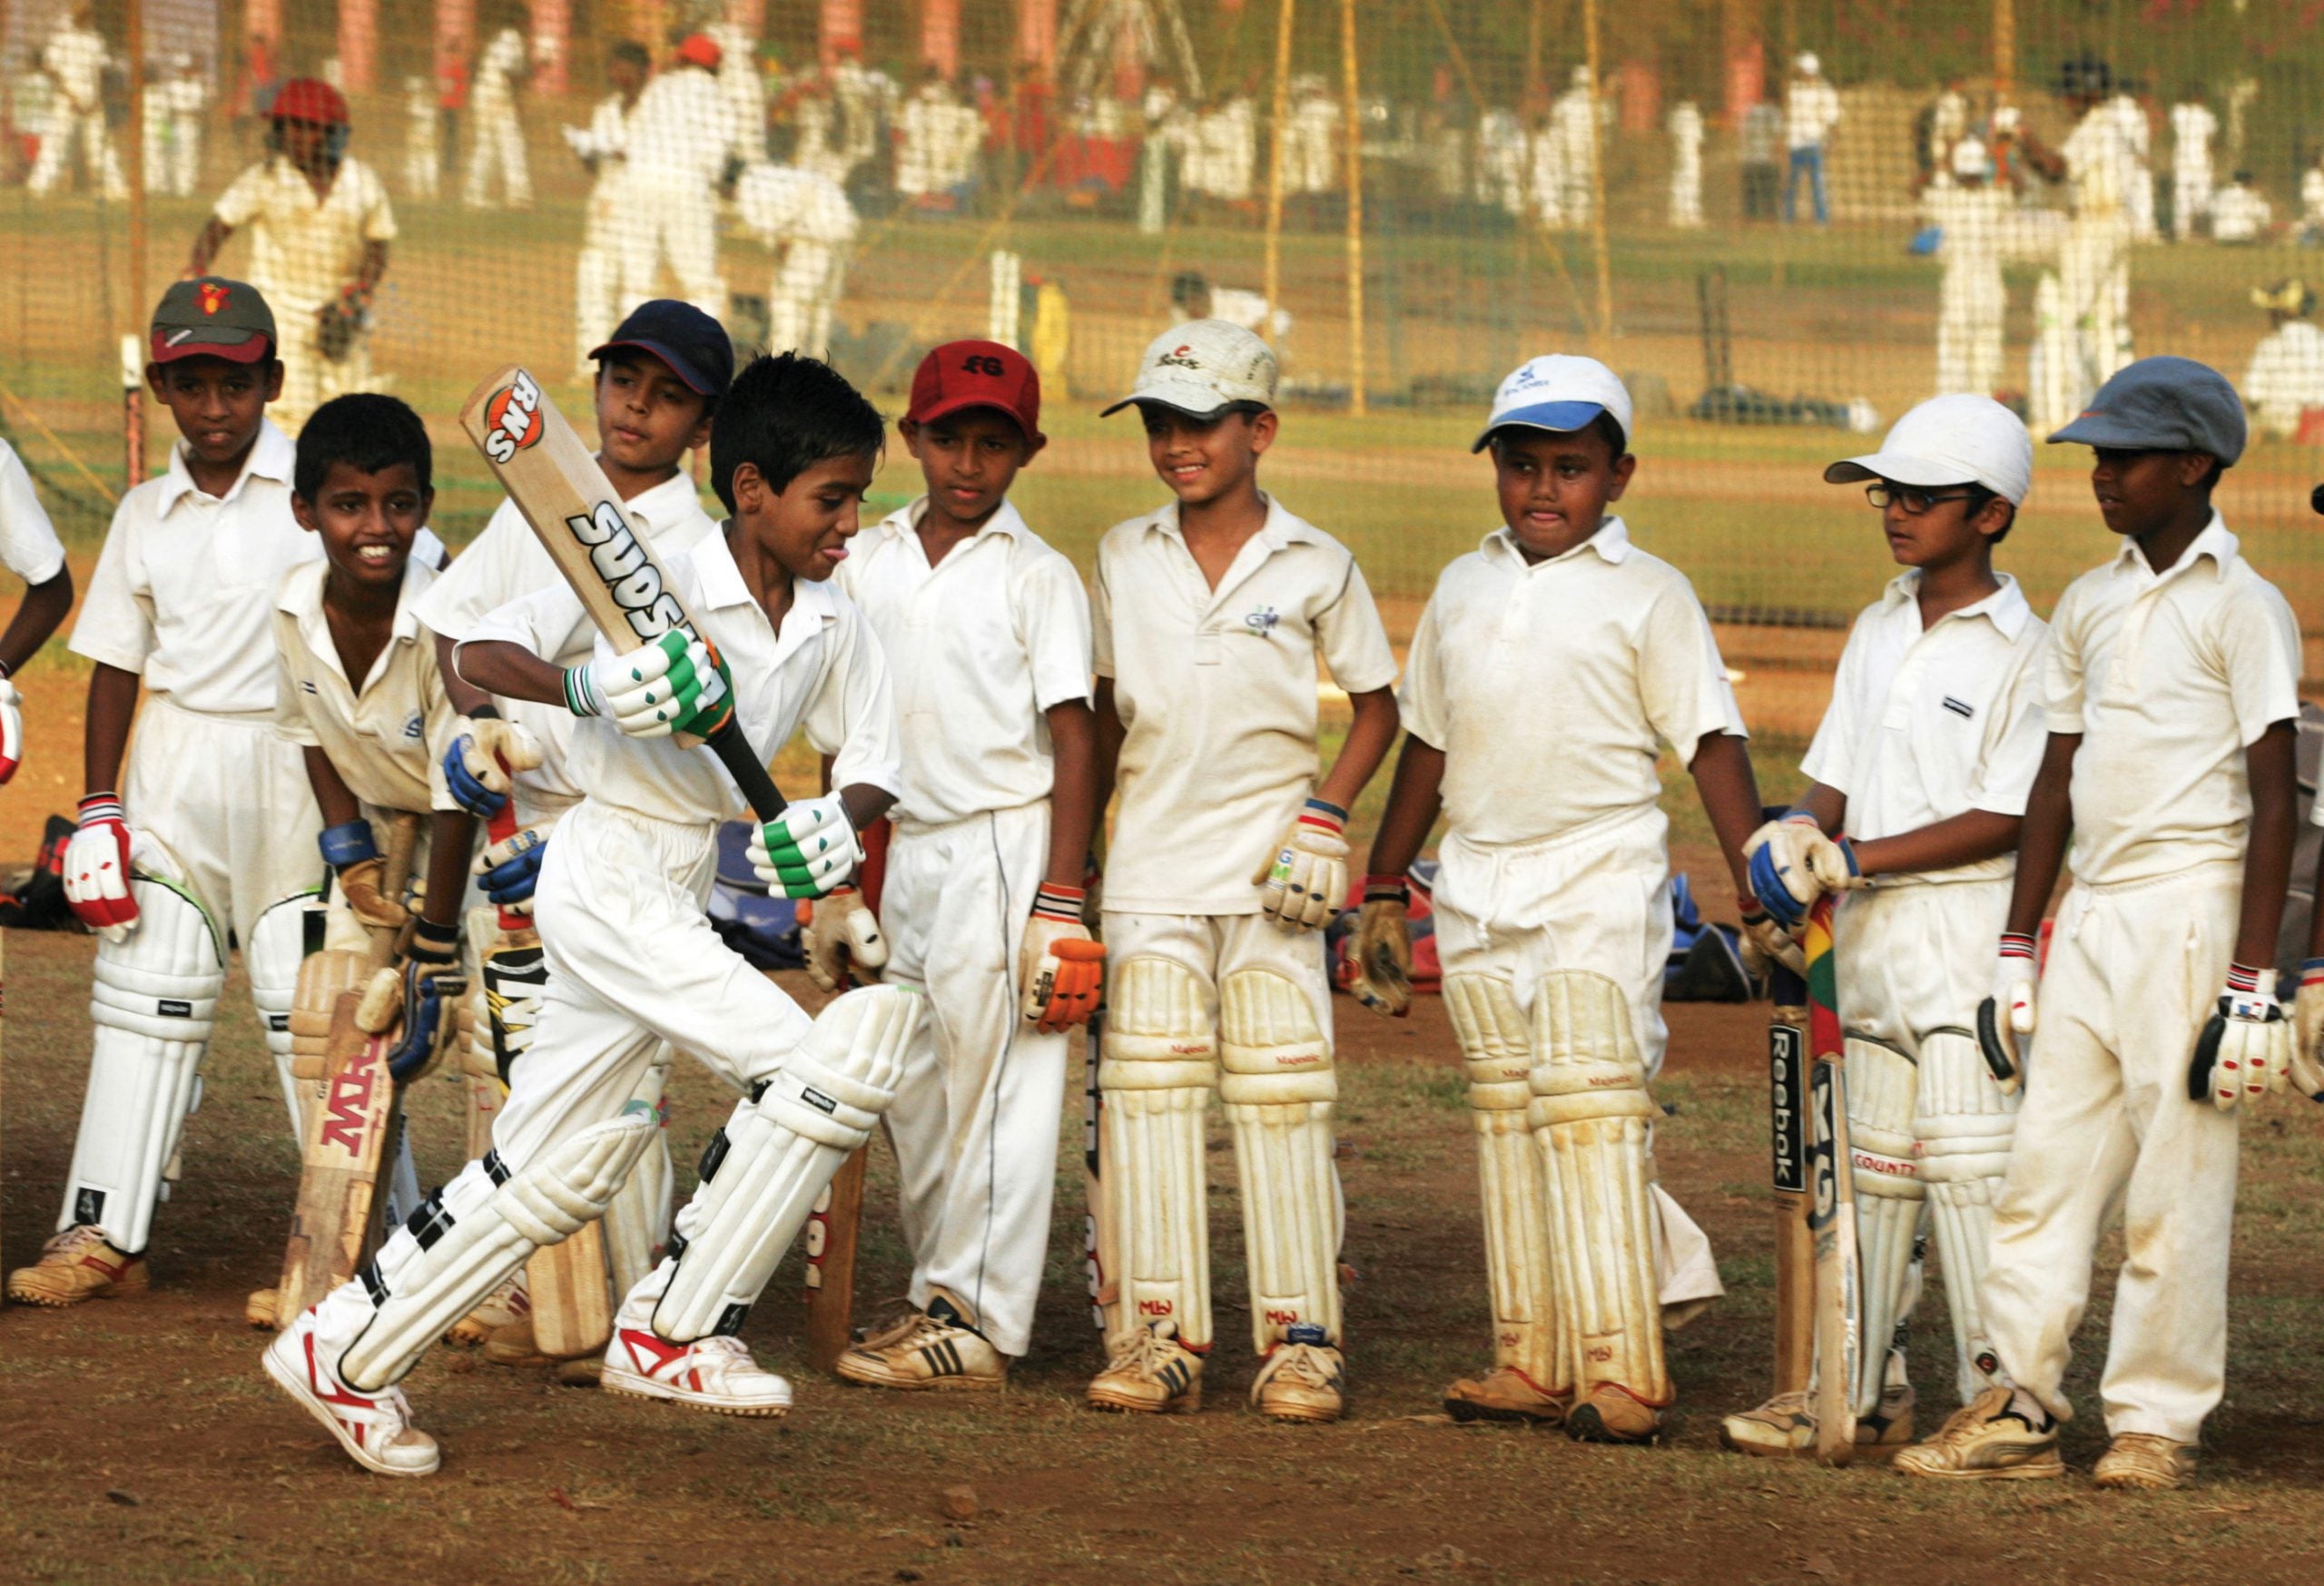 Ramachandra Guha’s The Commonwealth of Cricket: a delightful sporting memoir